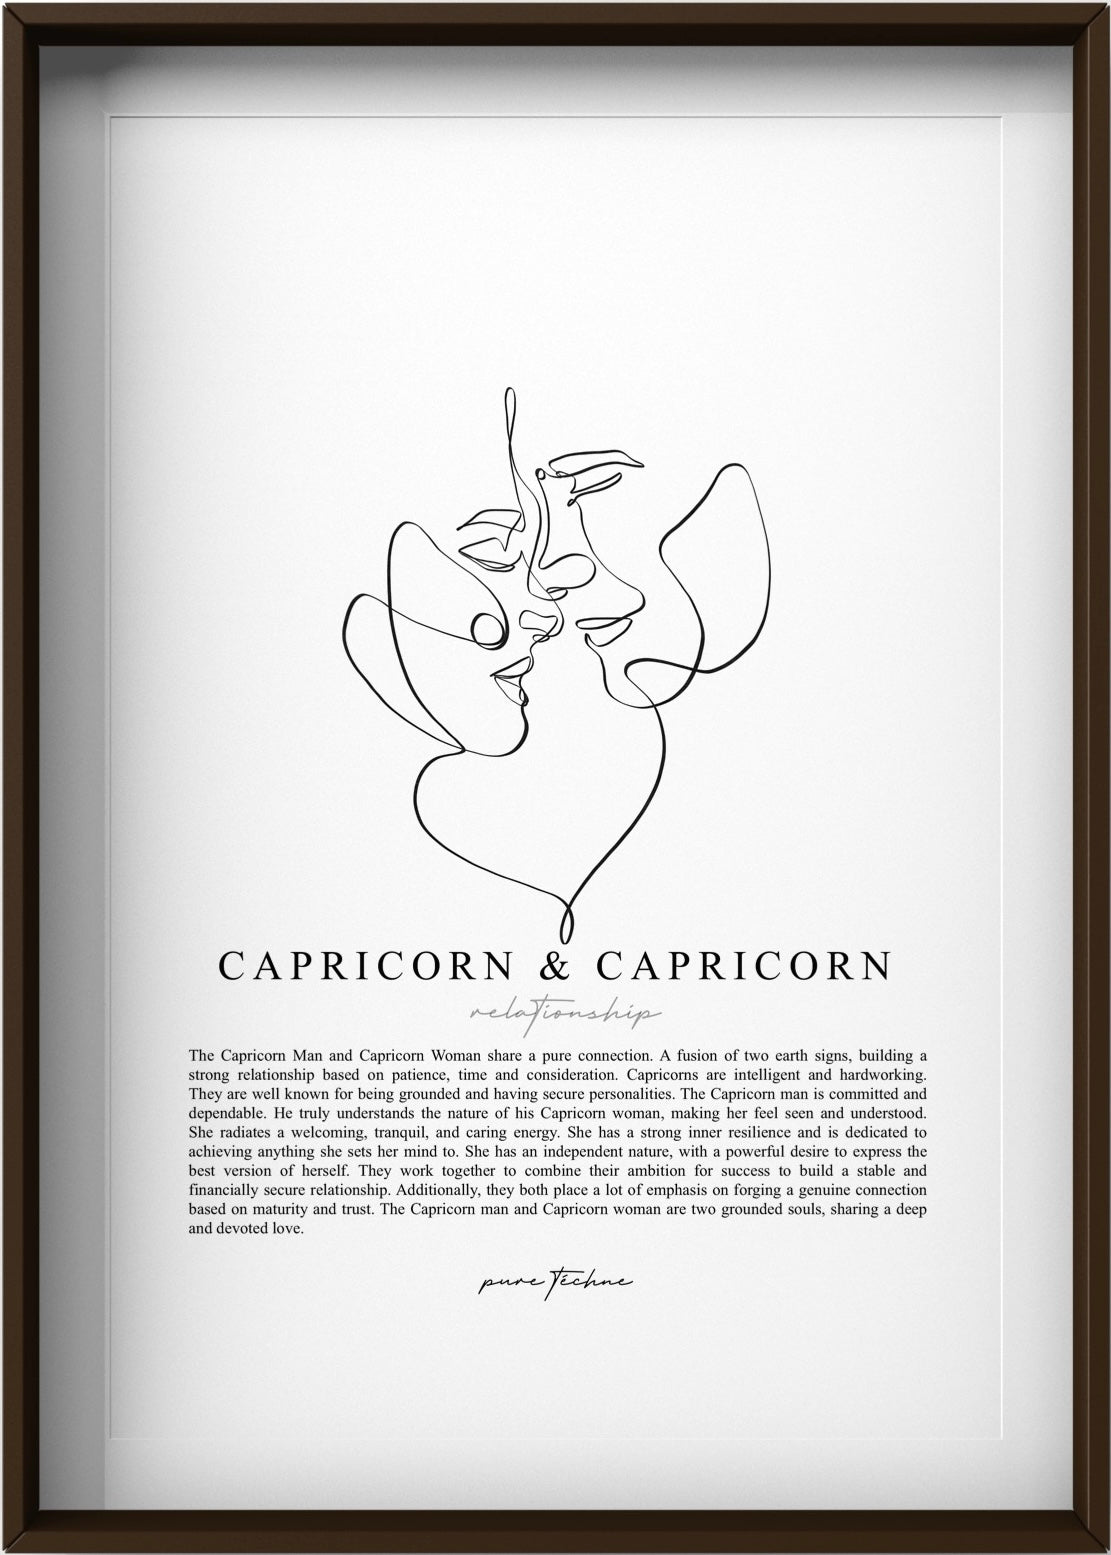 Capricorn Man & Capricorn Woman